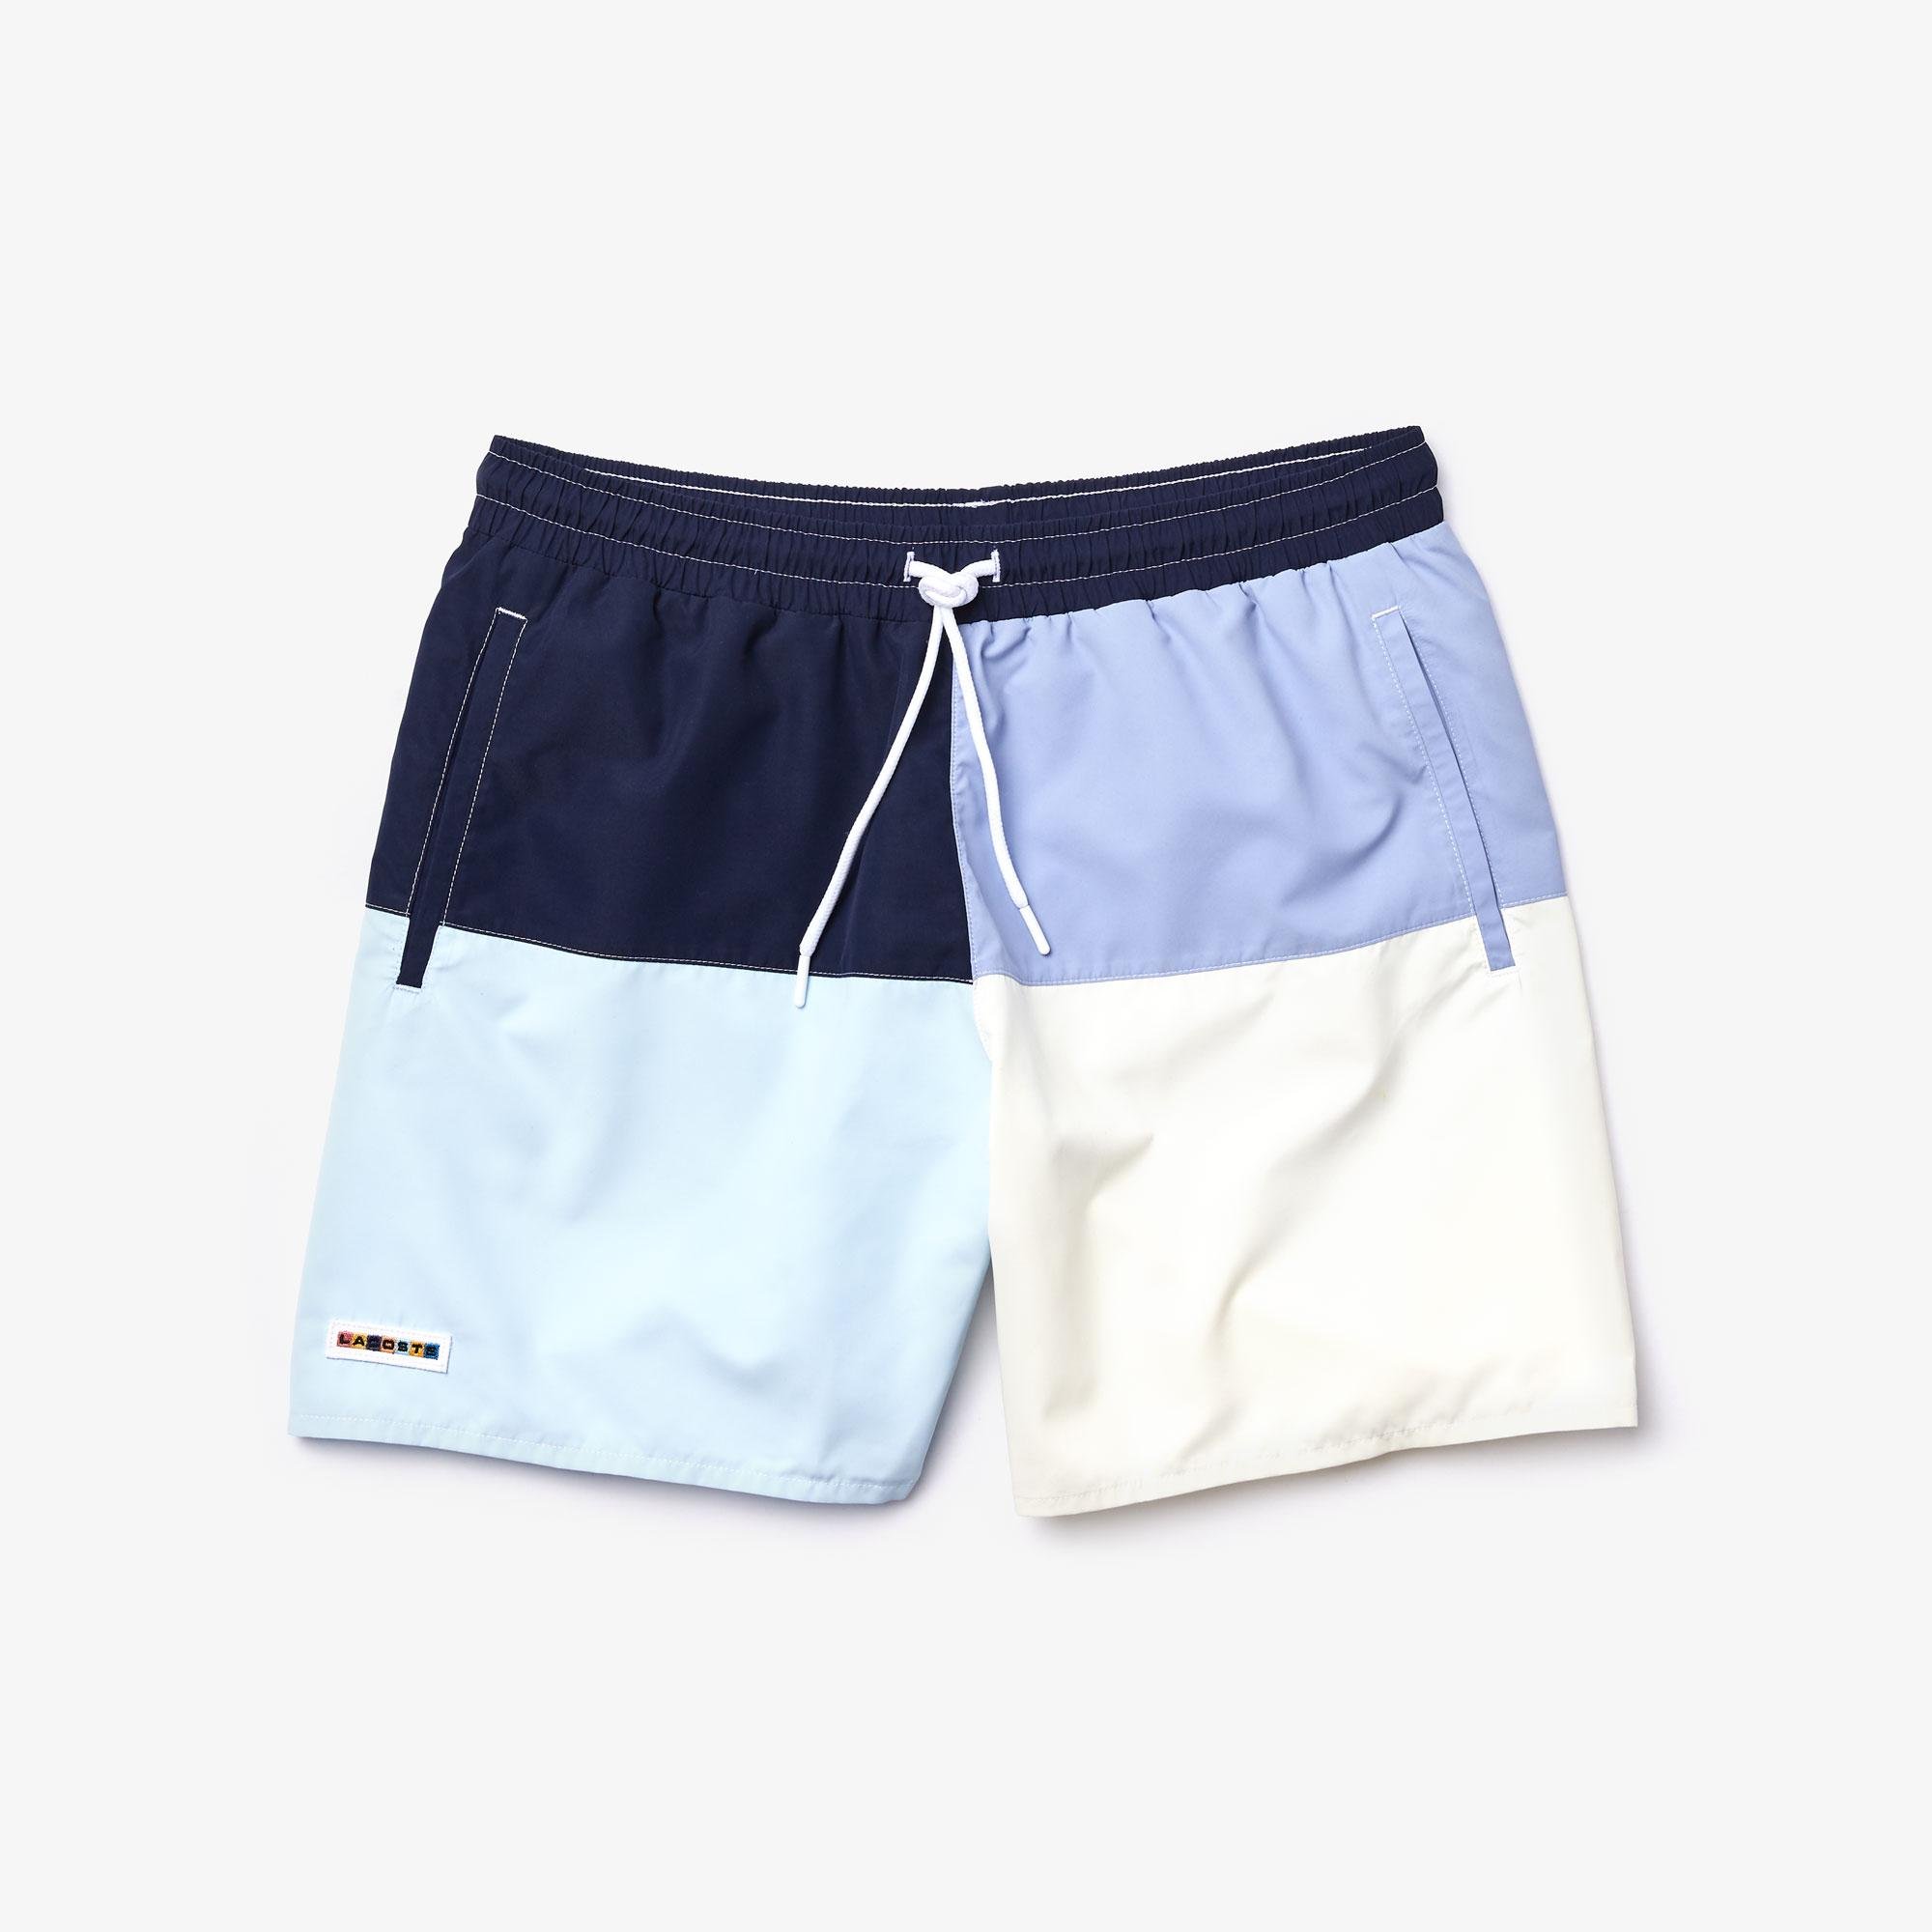 Lacoste Men's Colourblock Quick-Dry Swim Shorts